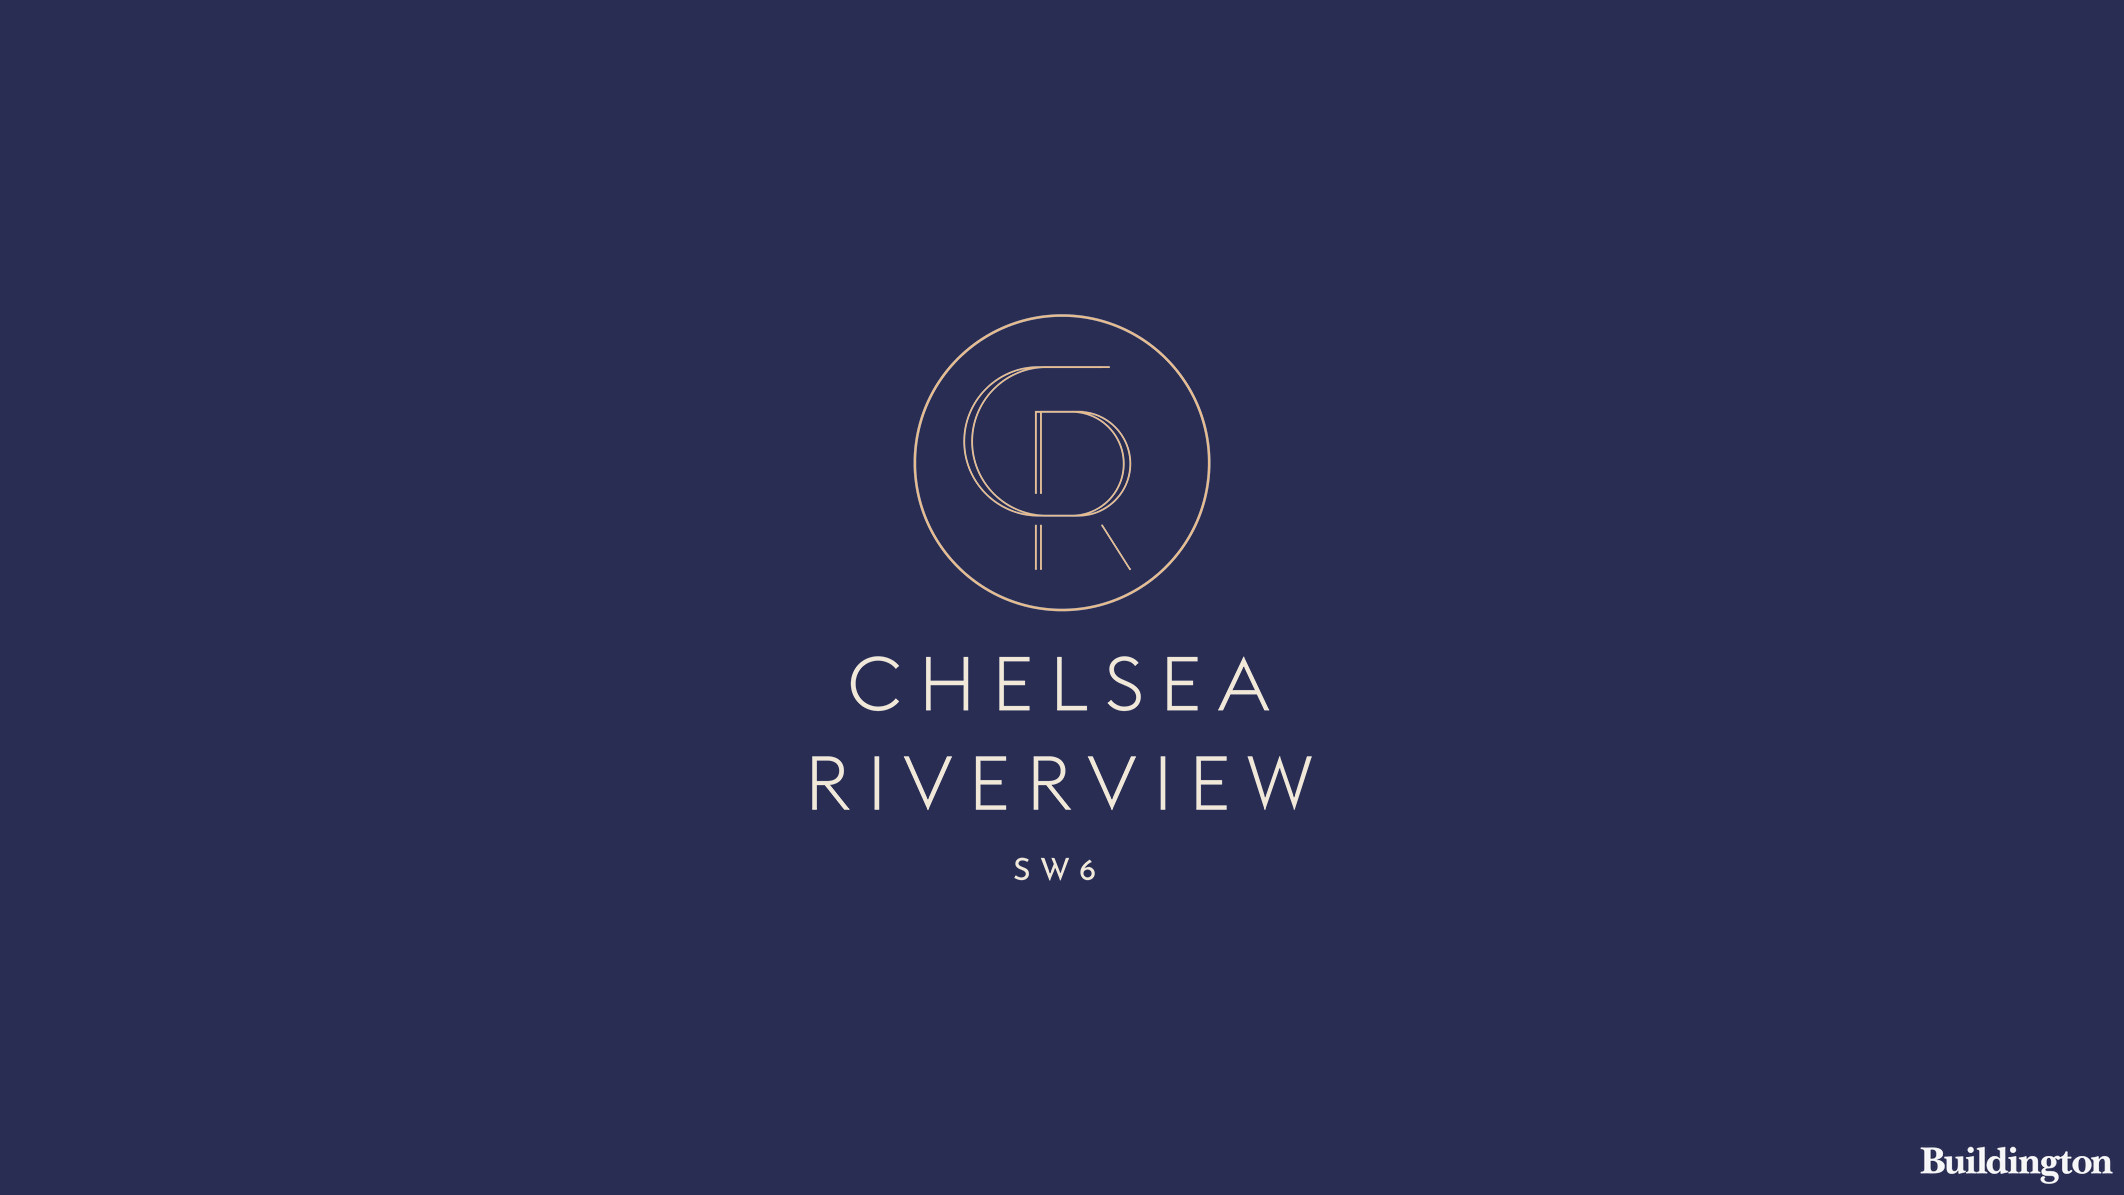 Chelsea Riverview development logo cover